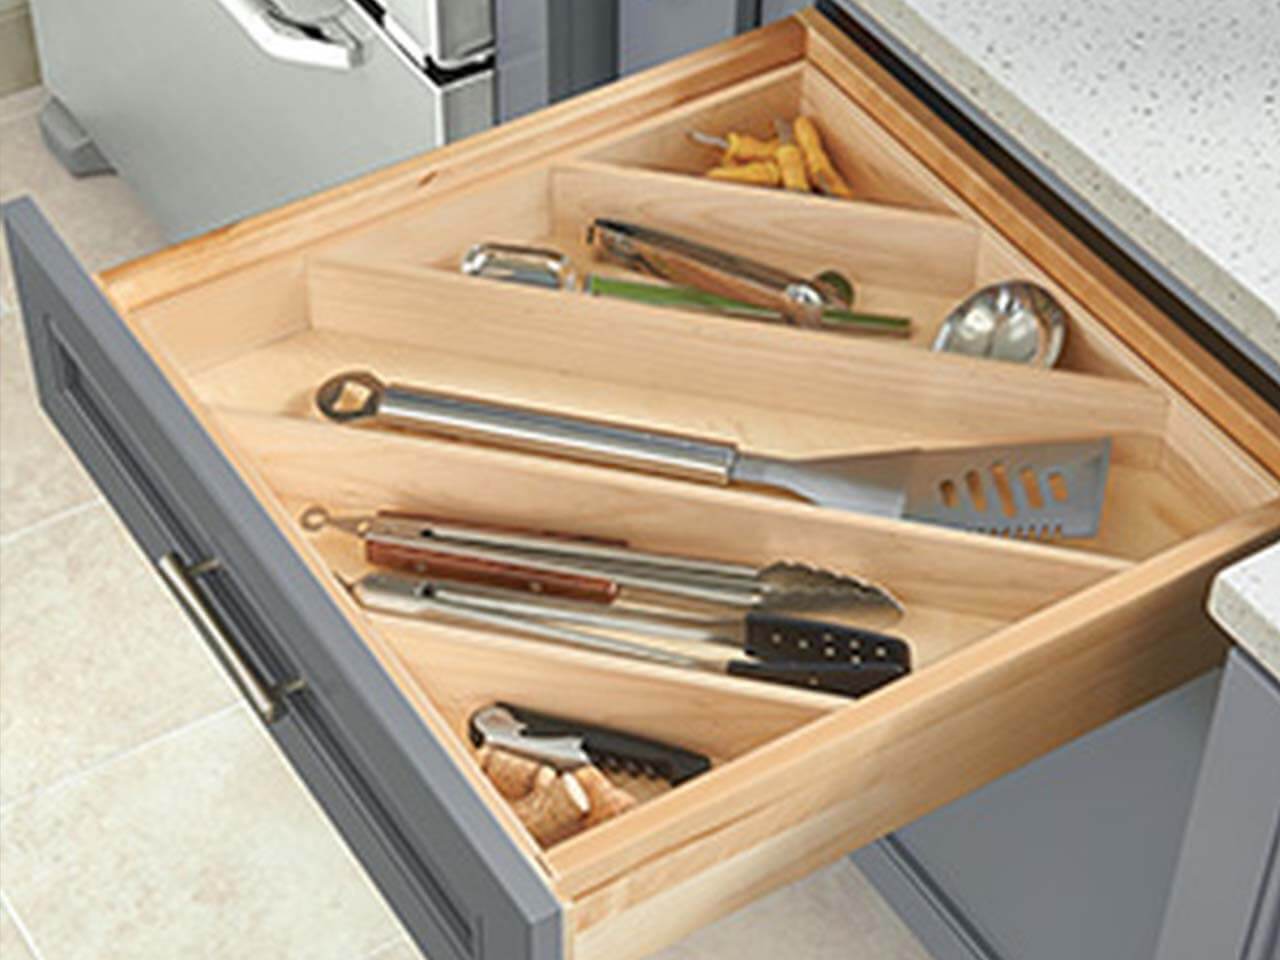 kitchen cabinet built in storage options for utensils